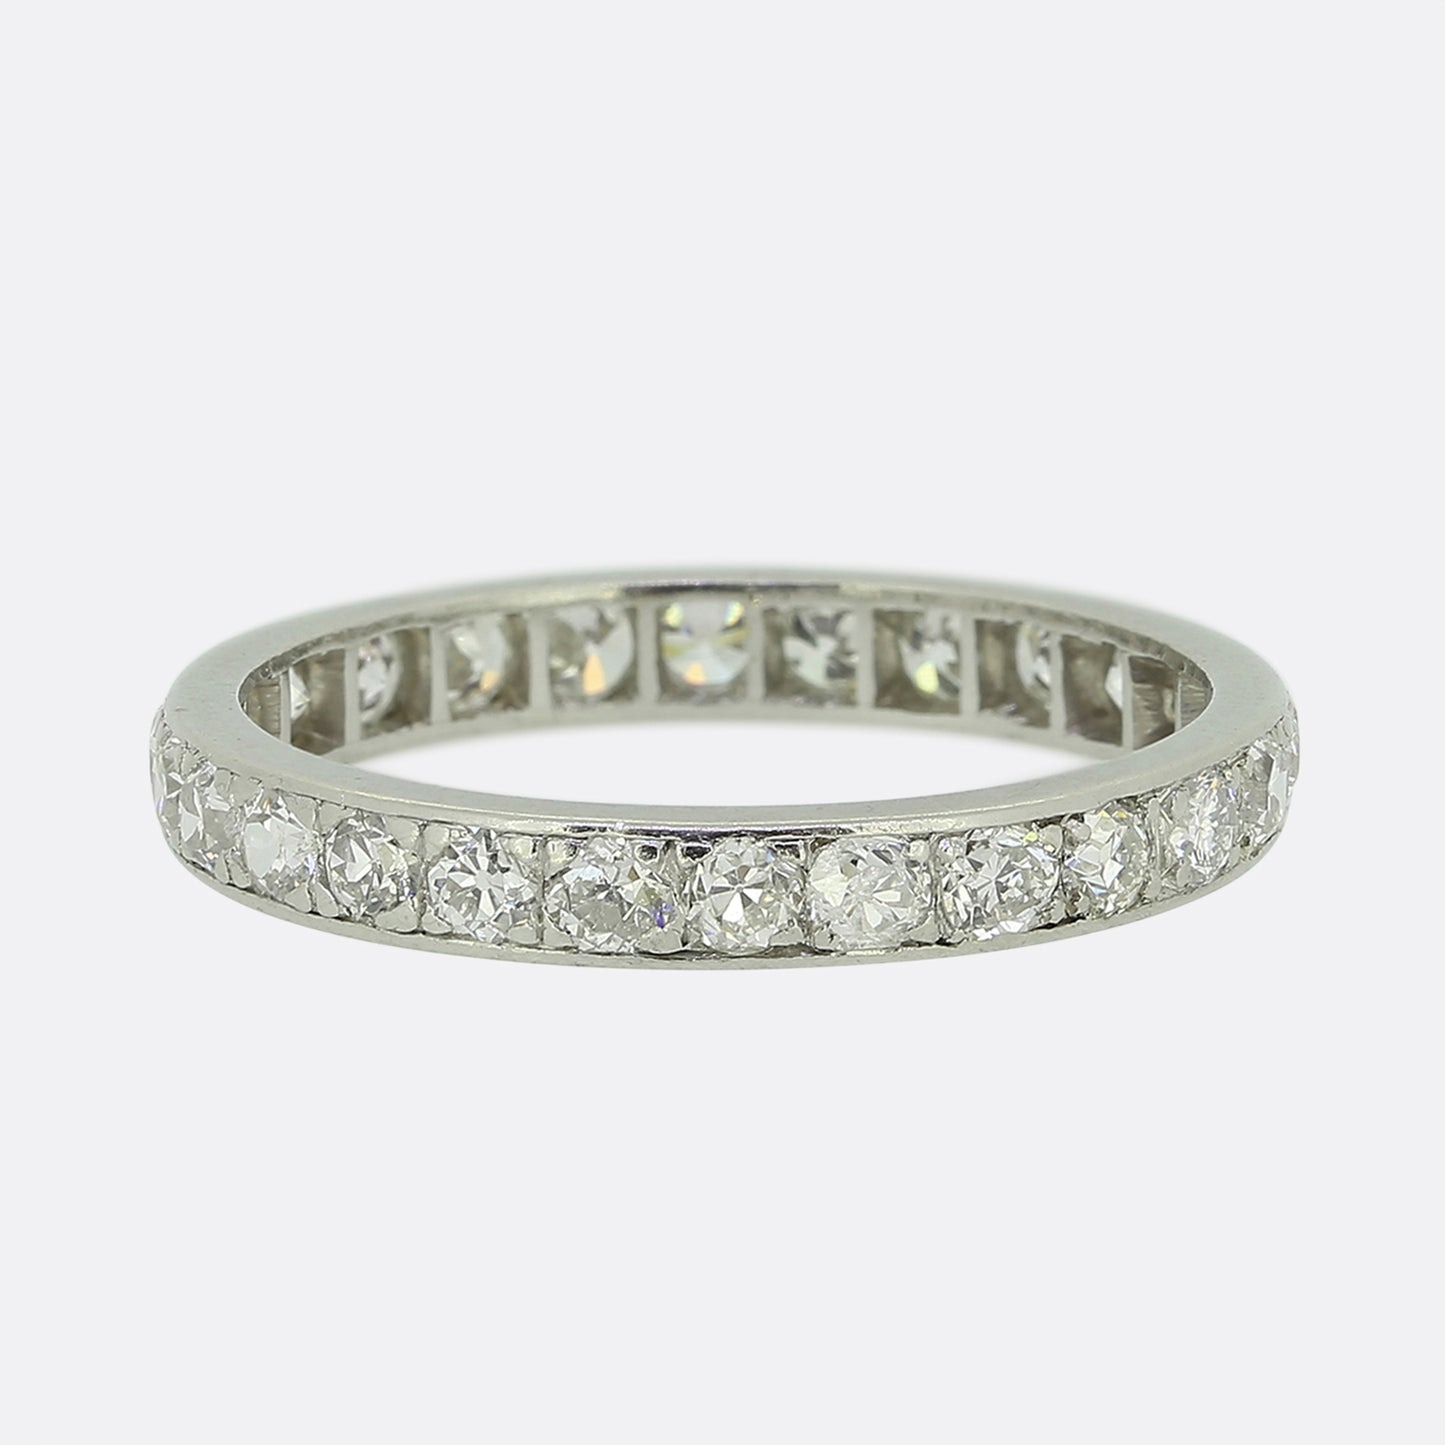 Antique Old Cut Diamond Full Eternity Ring Size P 1/2 (57)